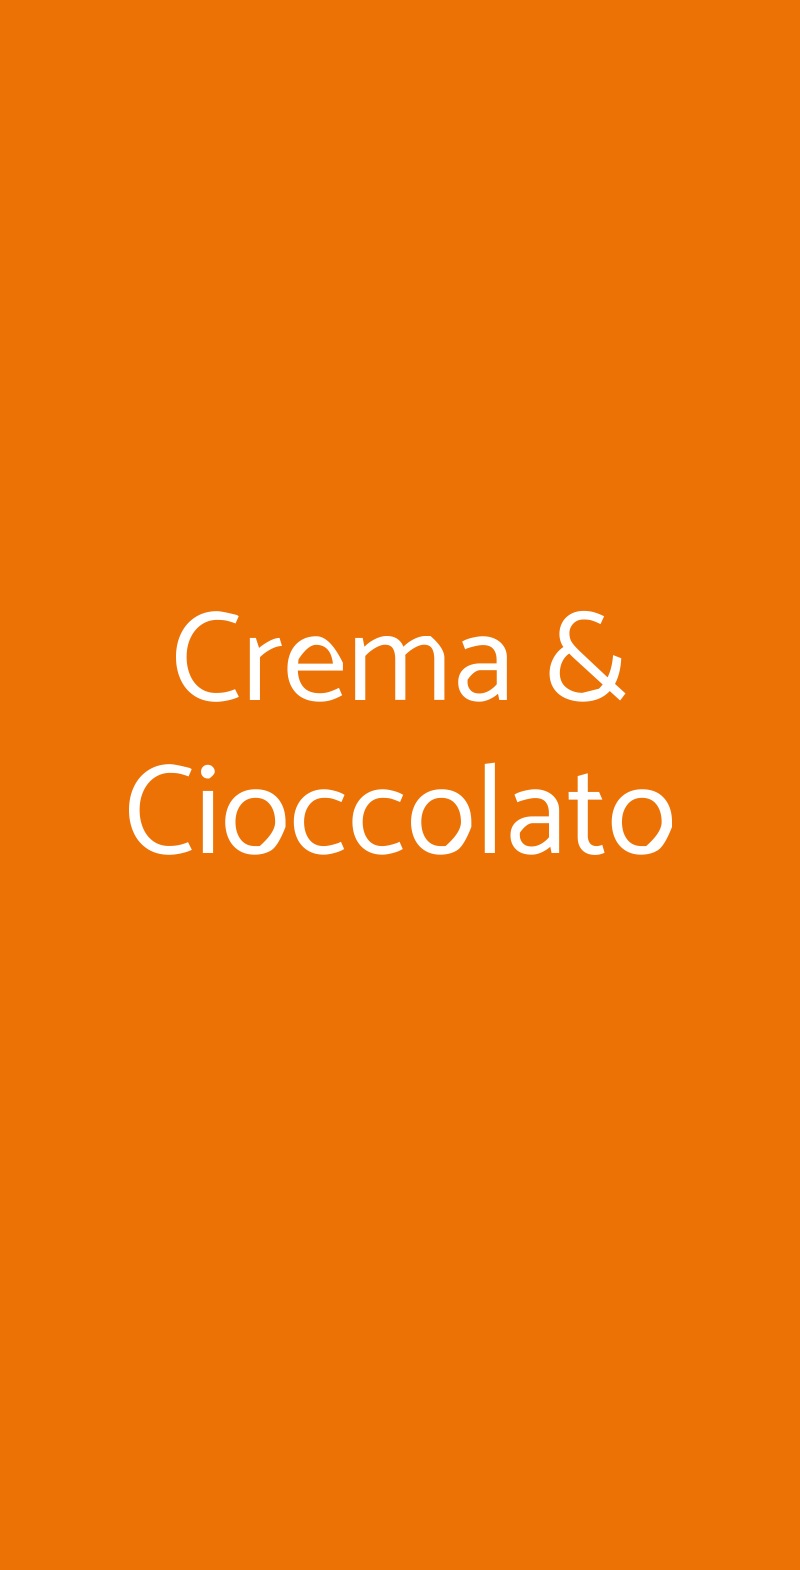 Crema & Cioccolato Torino menù 1 pagina